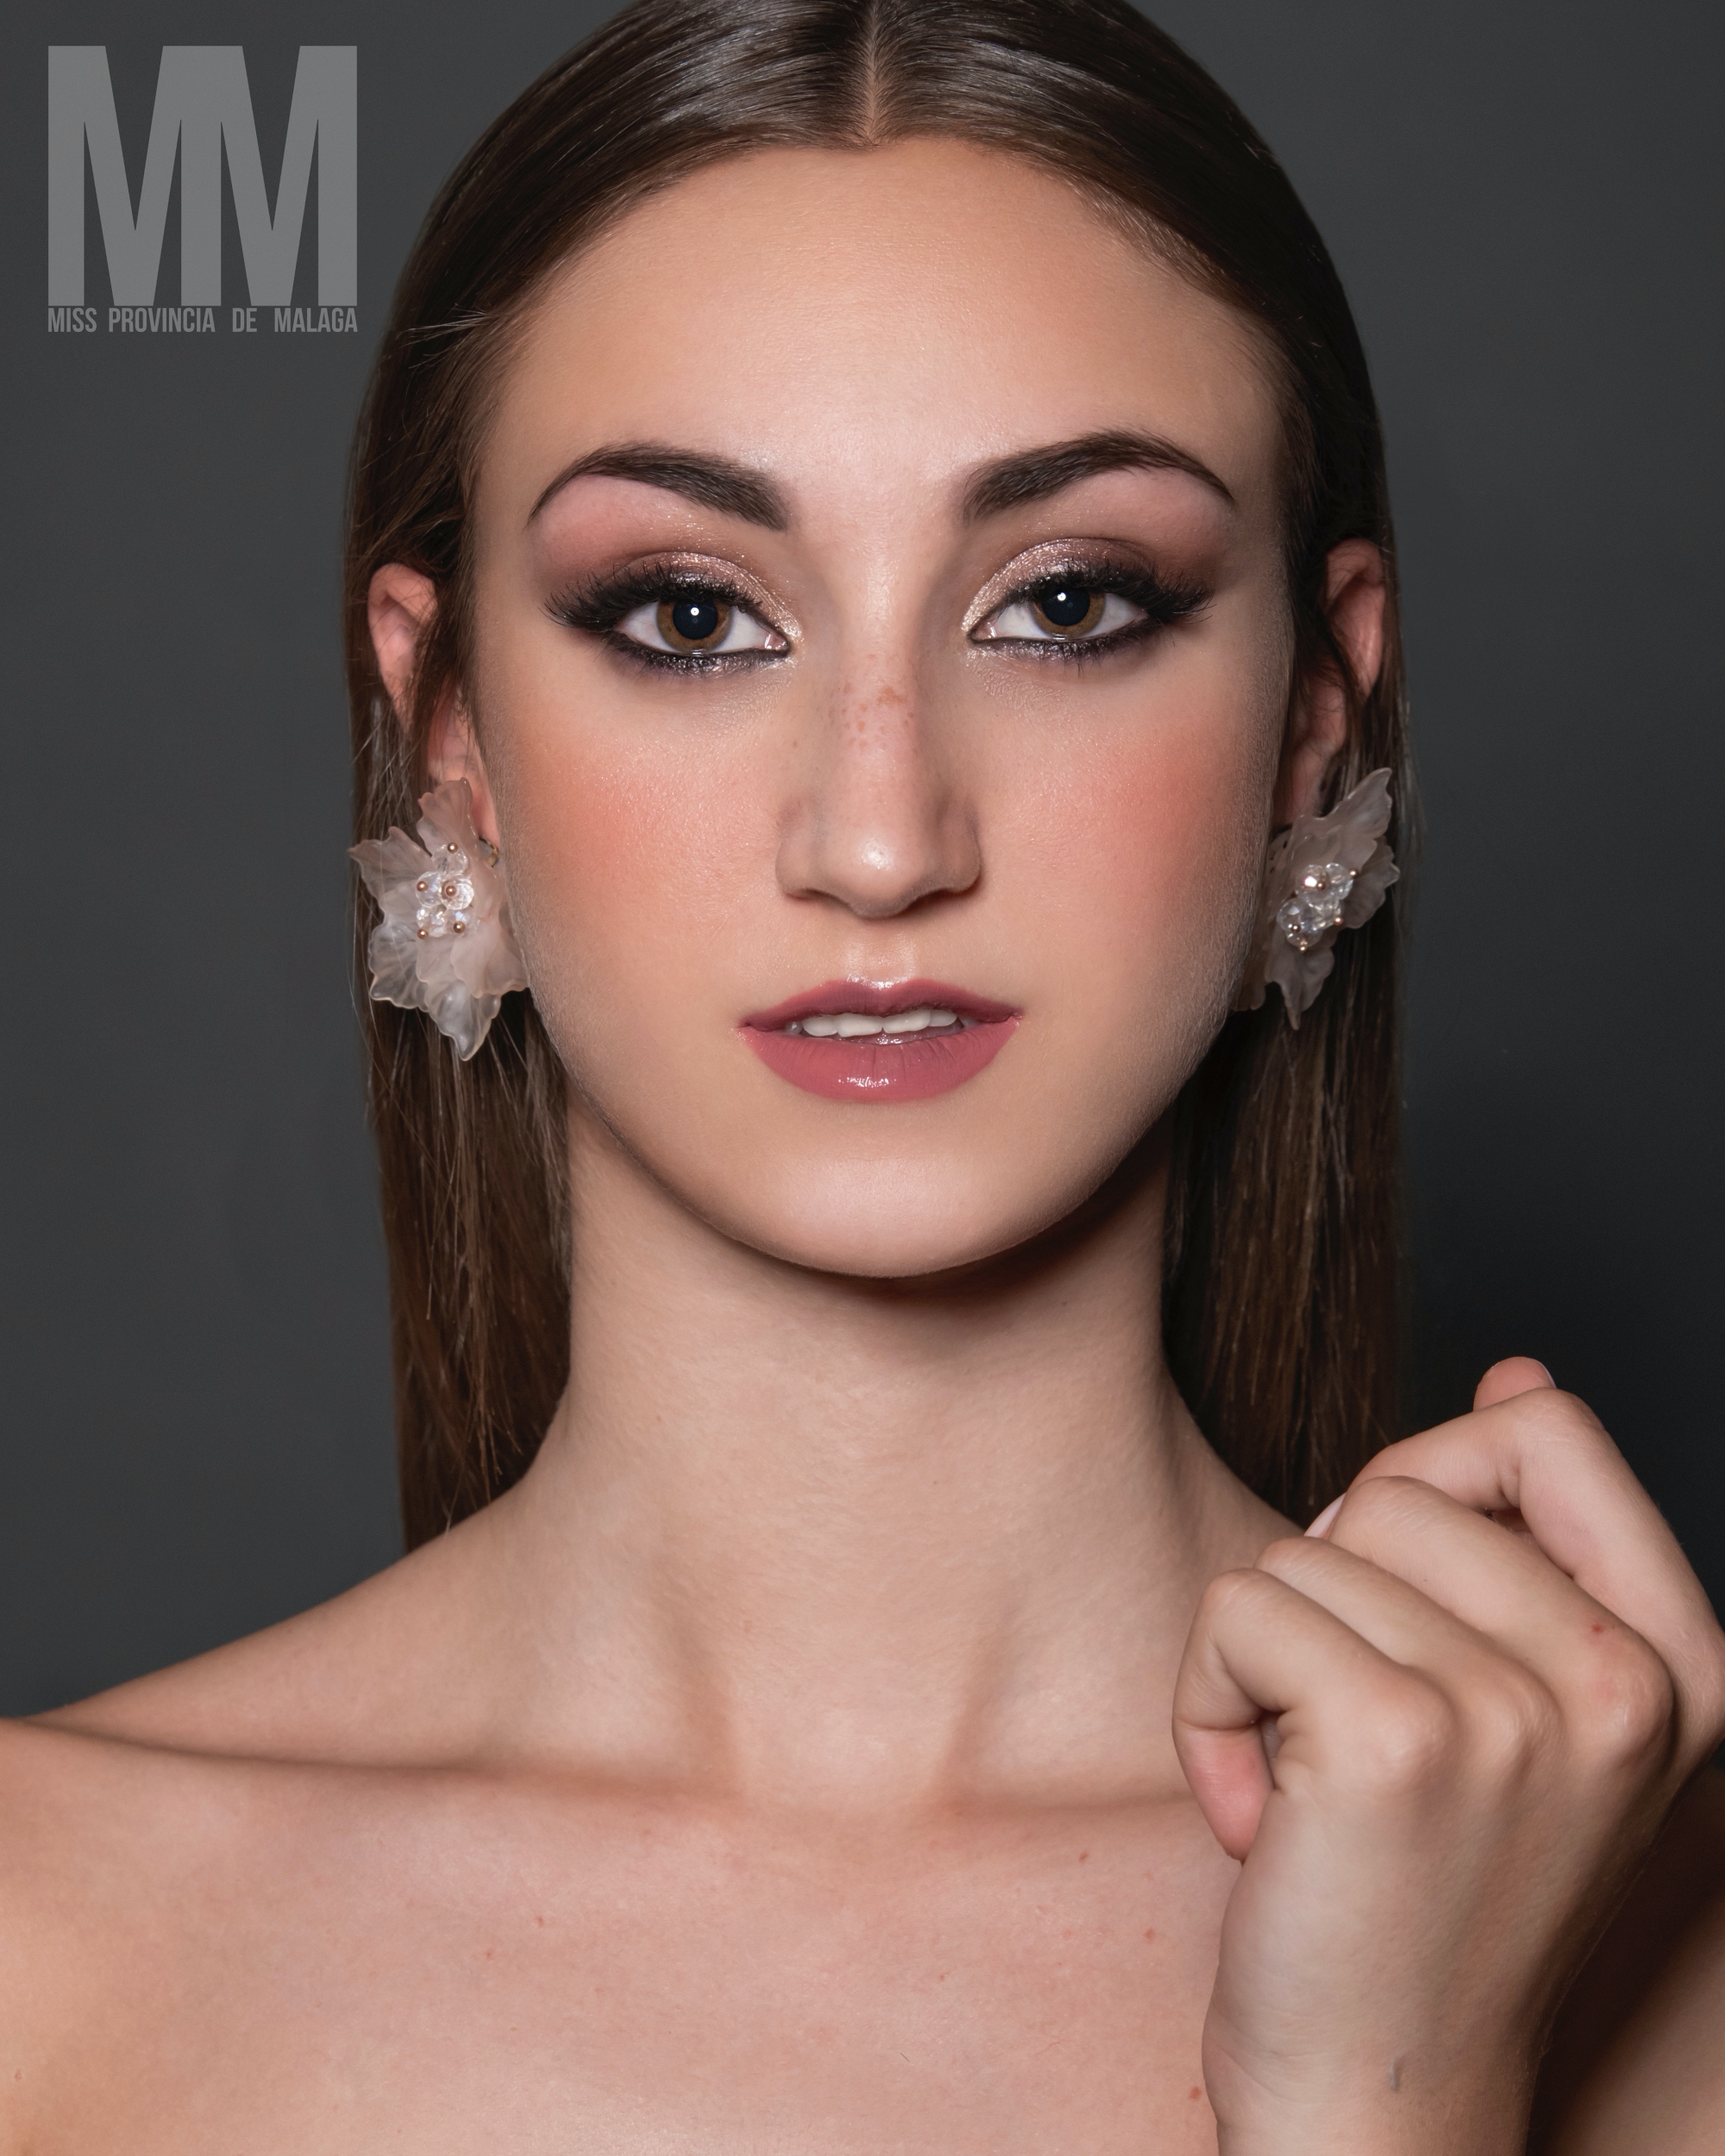 Miss Provincia de Malaga 2022 MISS SIERRA DE YEGUAS Mariana Ruz 1